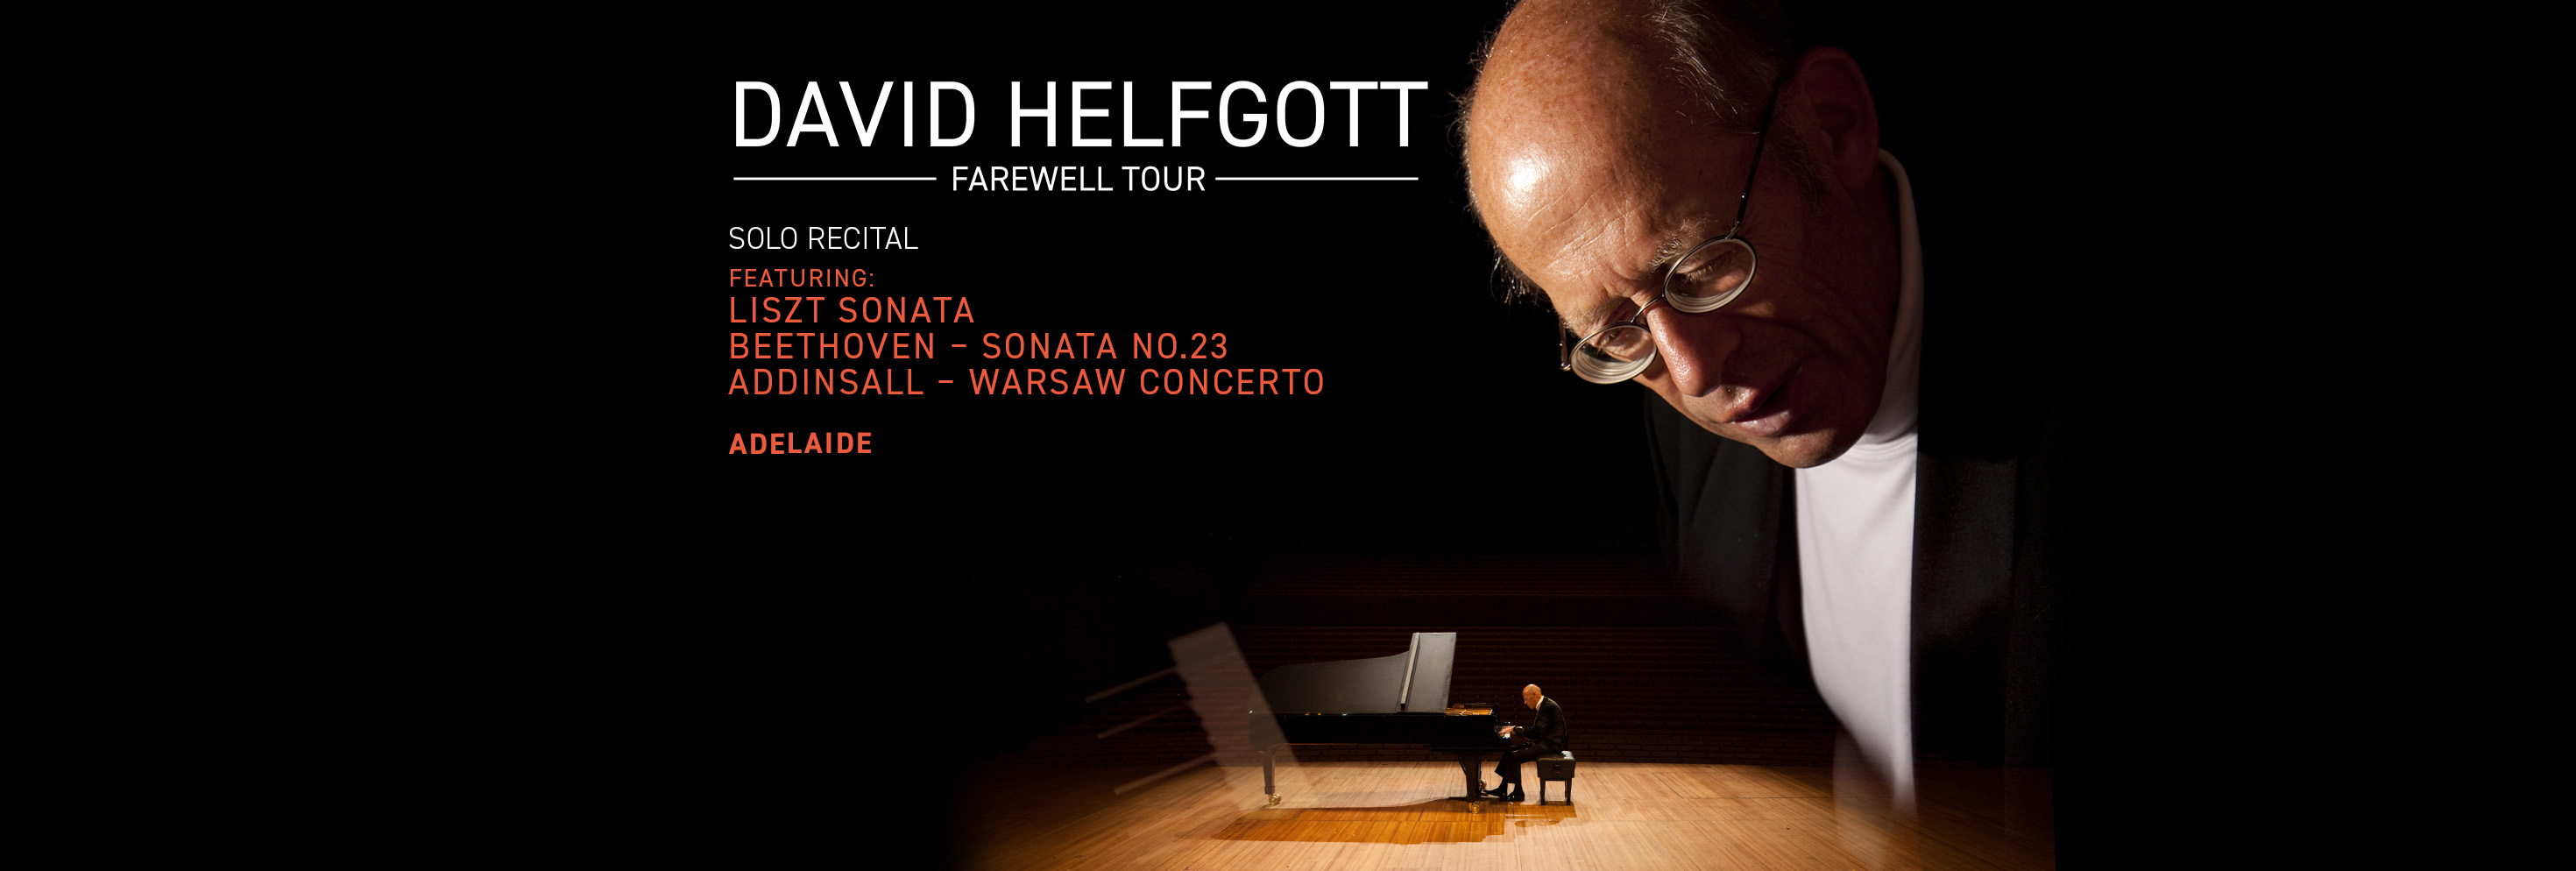 David Helfgott